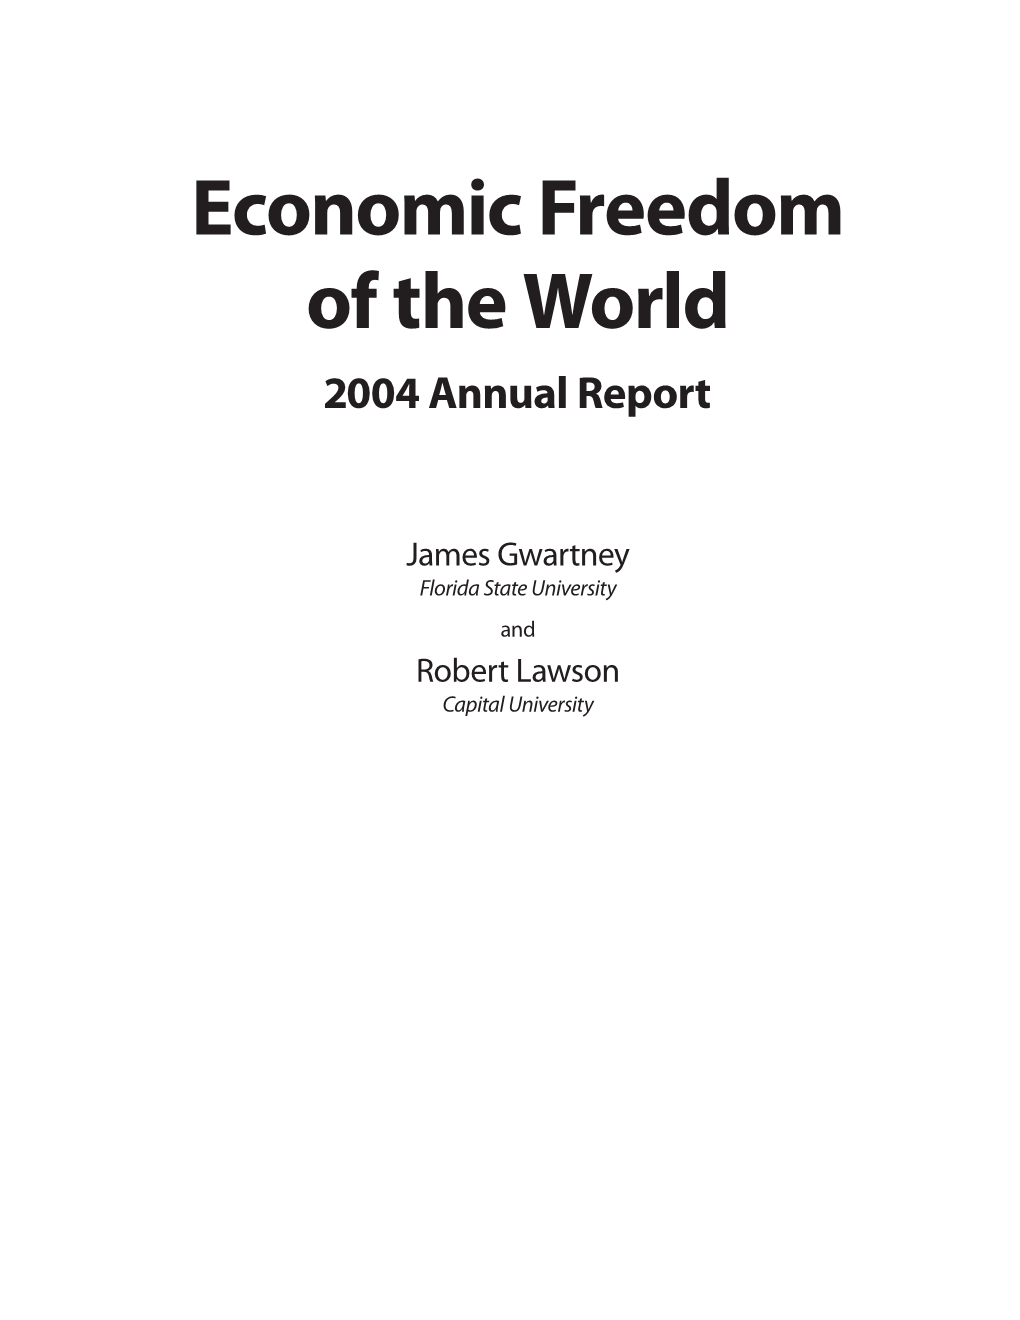 Economic Freedom of the World: 2004 Annual Report Iii